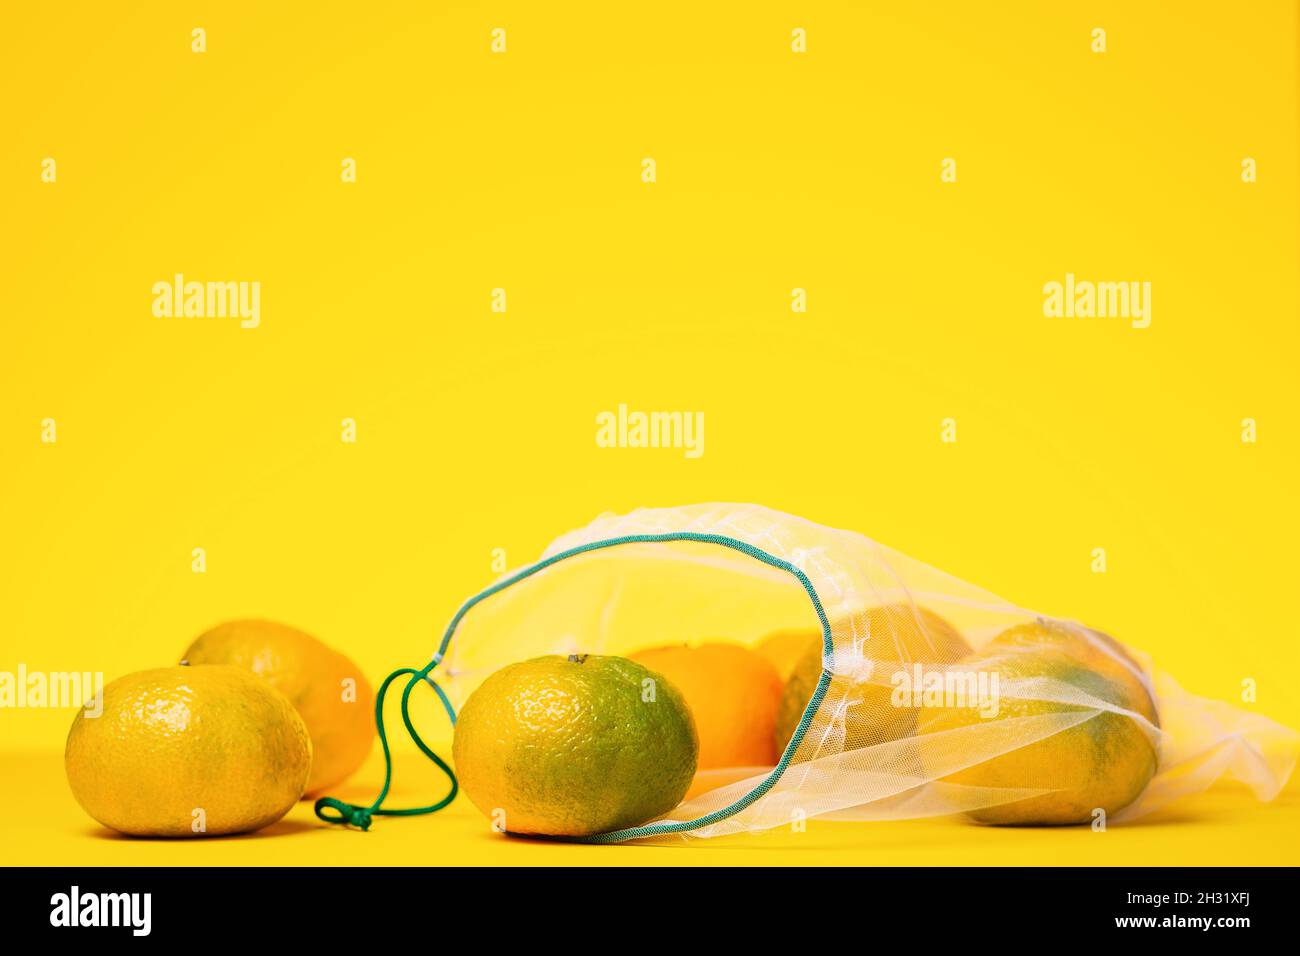 https://c8.alamy.com/comp/2H31XFJ/fresh-tangerines-in-reusable-eco-friendly-mesh-bag-on-yellow-background-copy-space-zero-waste-shopping-concept-2H31XFJ.jpg